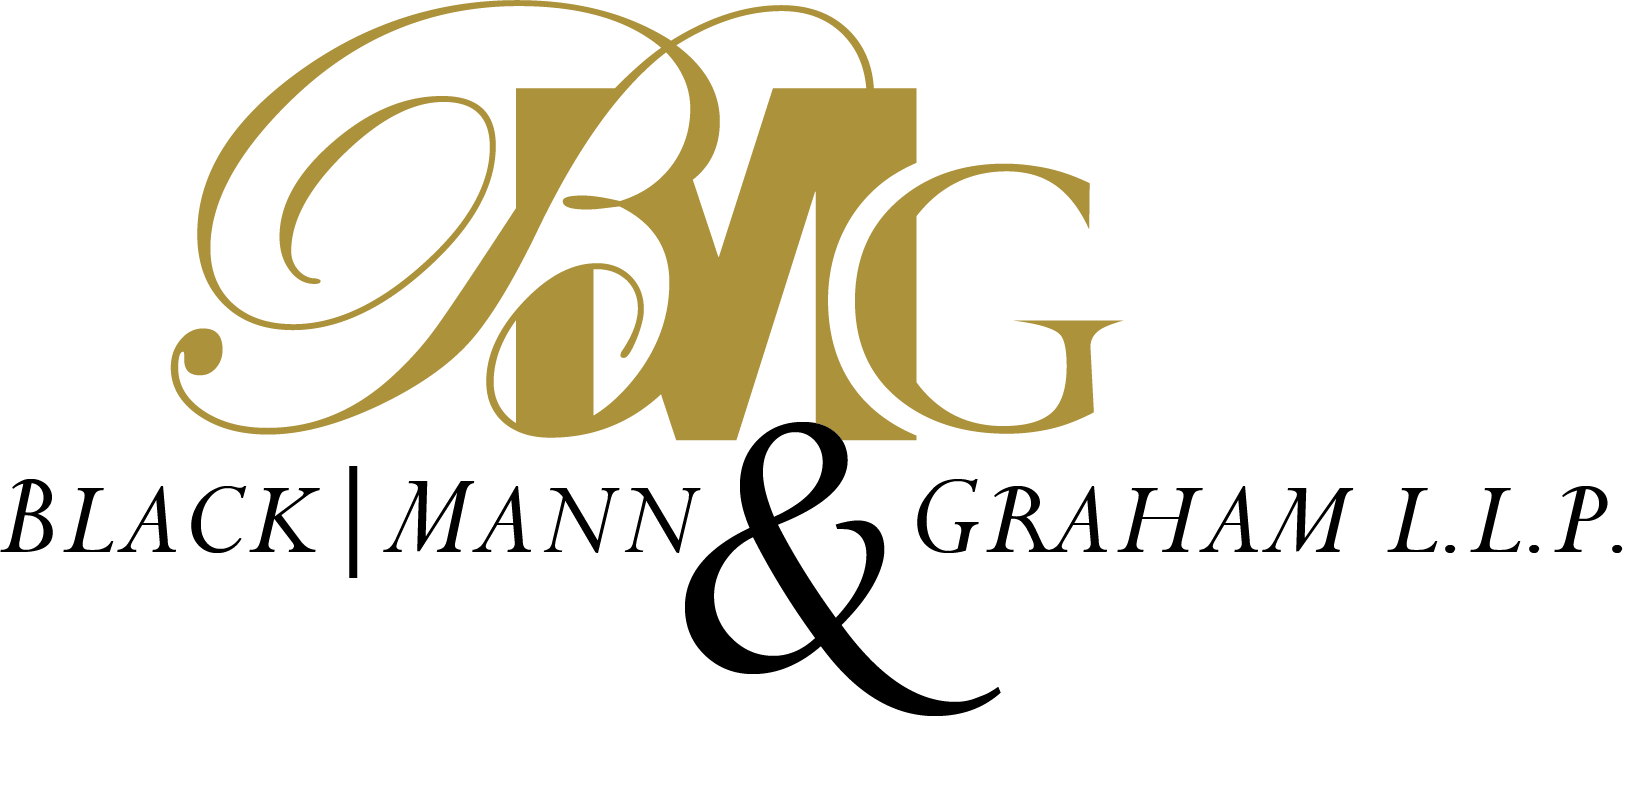 Black, Mann & Graham L.L.P. Company Logo